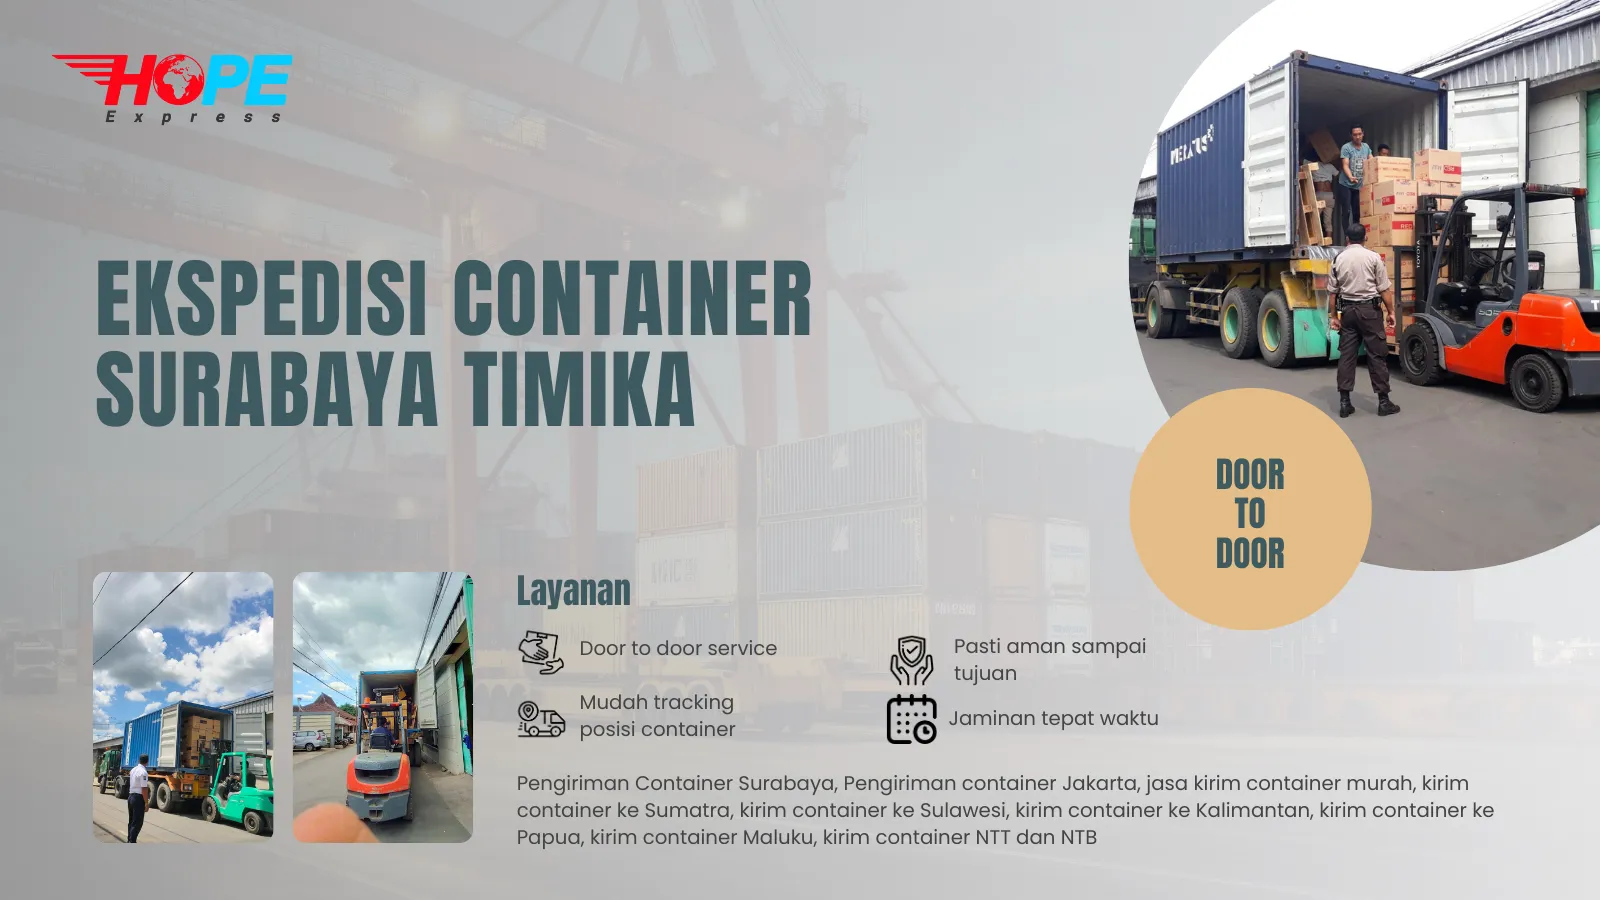 Ekspedisi Container Surabaya Timika